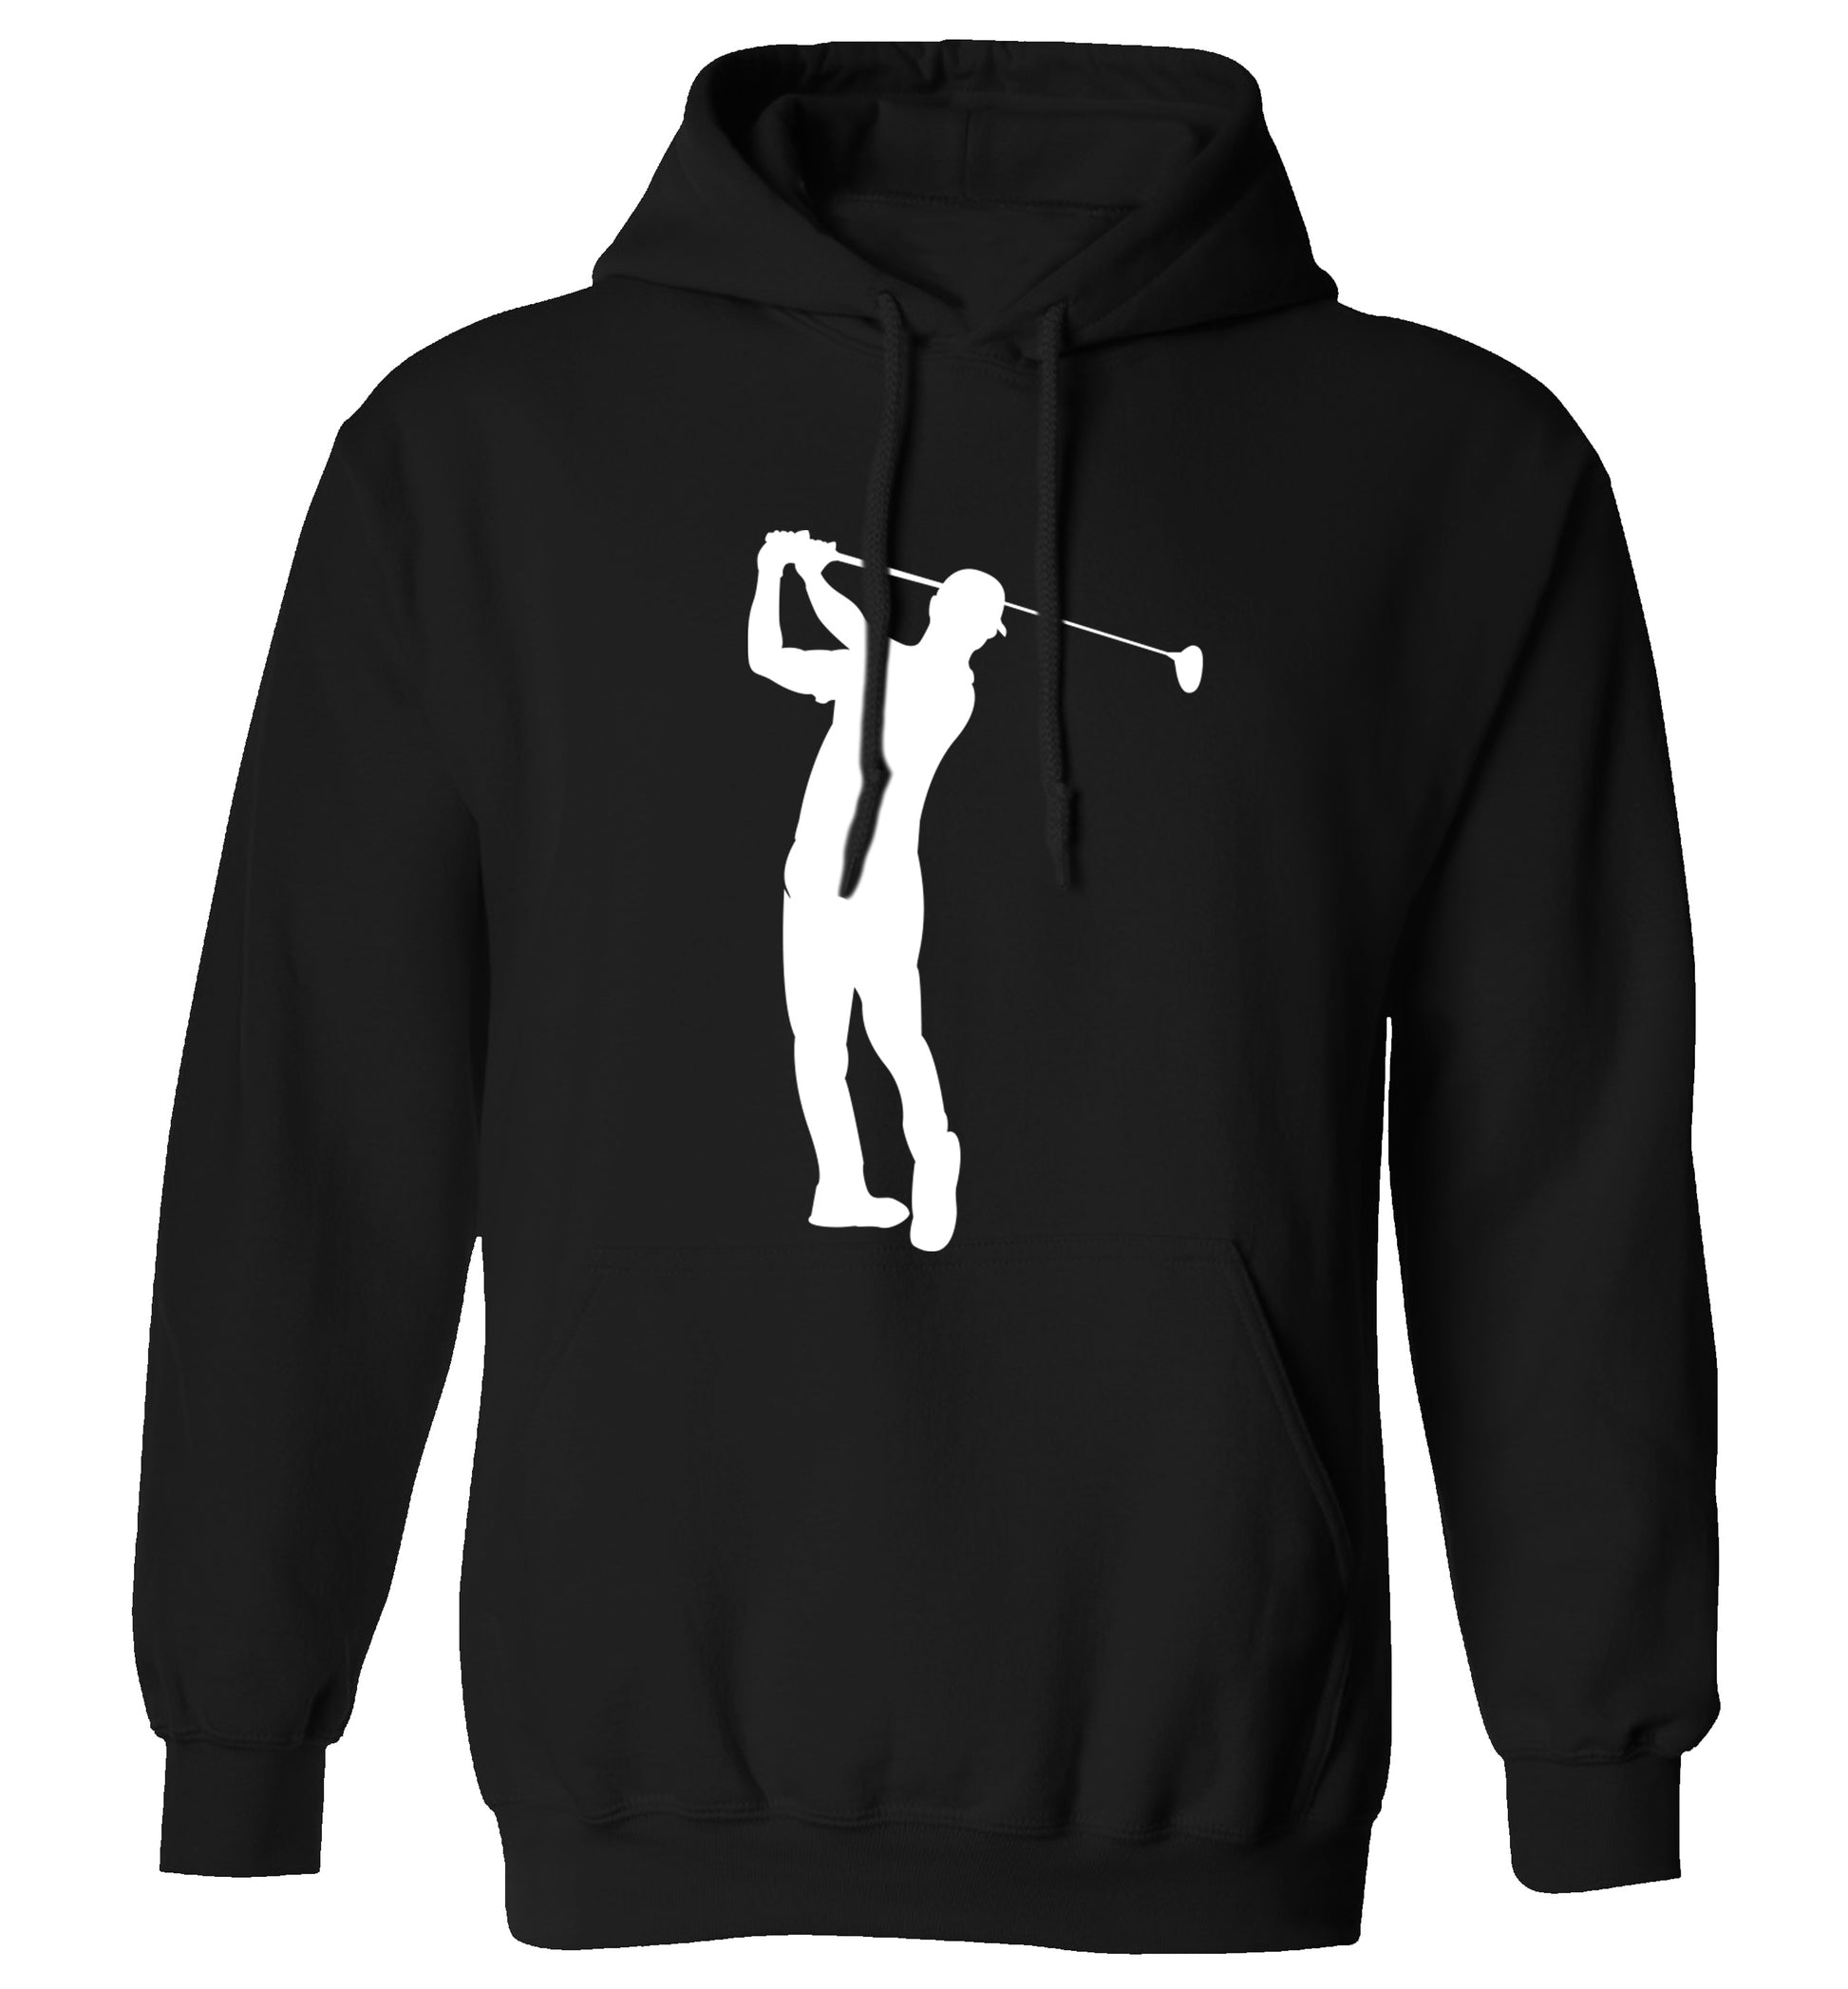 Golfer Illustration adults unisex black hoodie 2XL